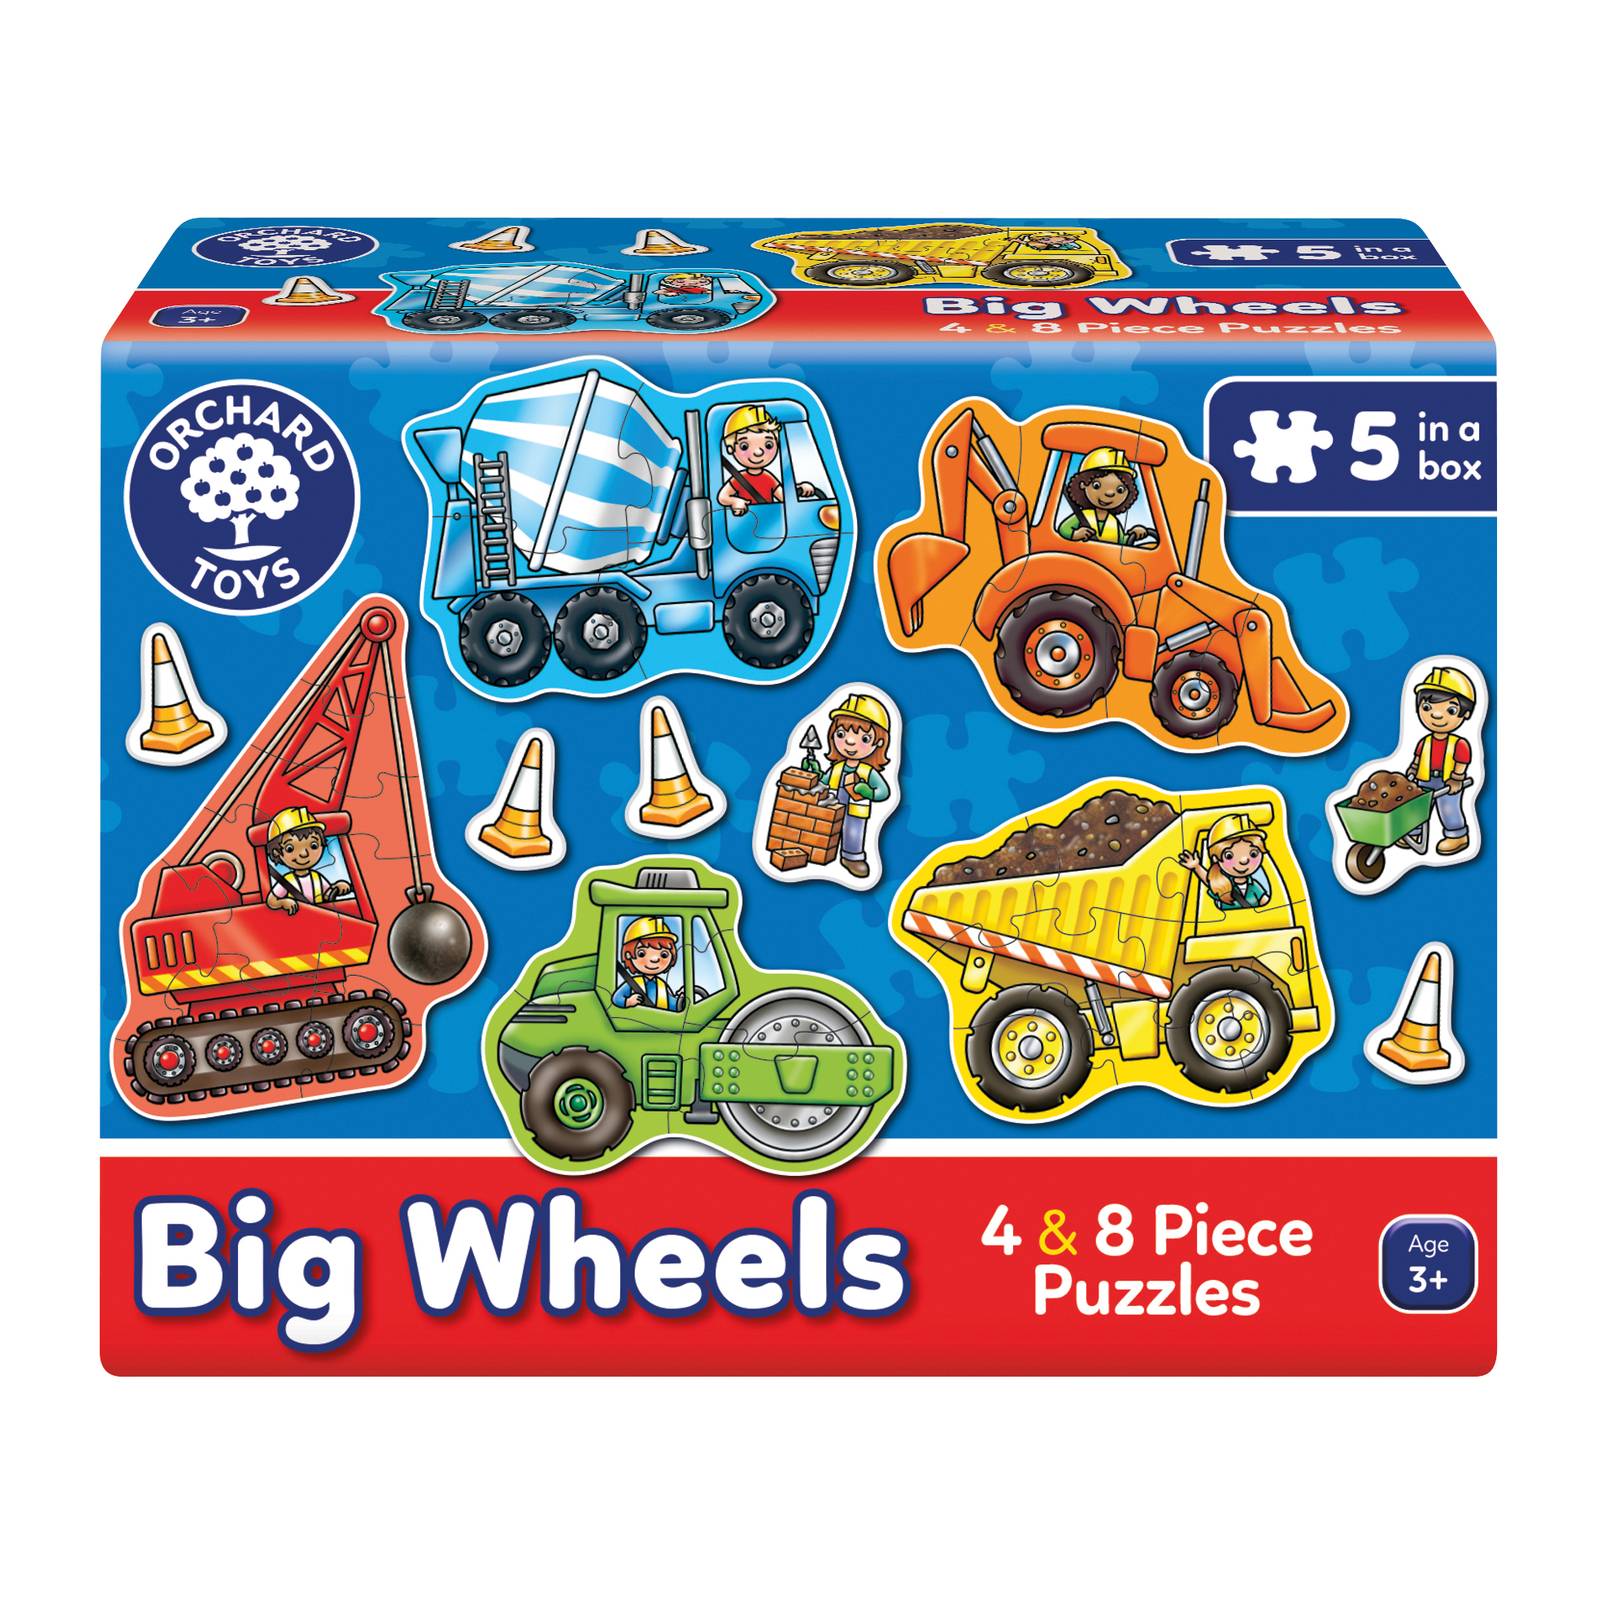 https://www.hobbycraft.co.uk/on/demandware.static/-/Sites-hobbycraft-uk-master/default/dw4e4e6cec/images/large/662594_1000_1_-orchard-toys-big-wheels-puzzle-kids.jpg